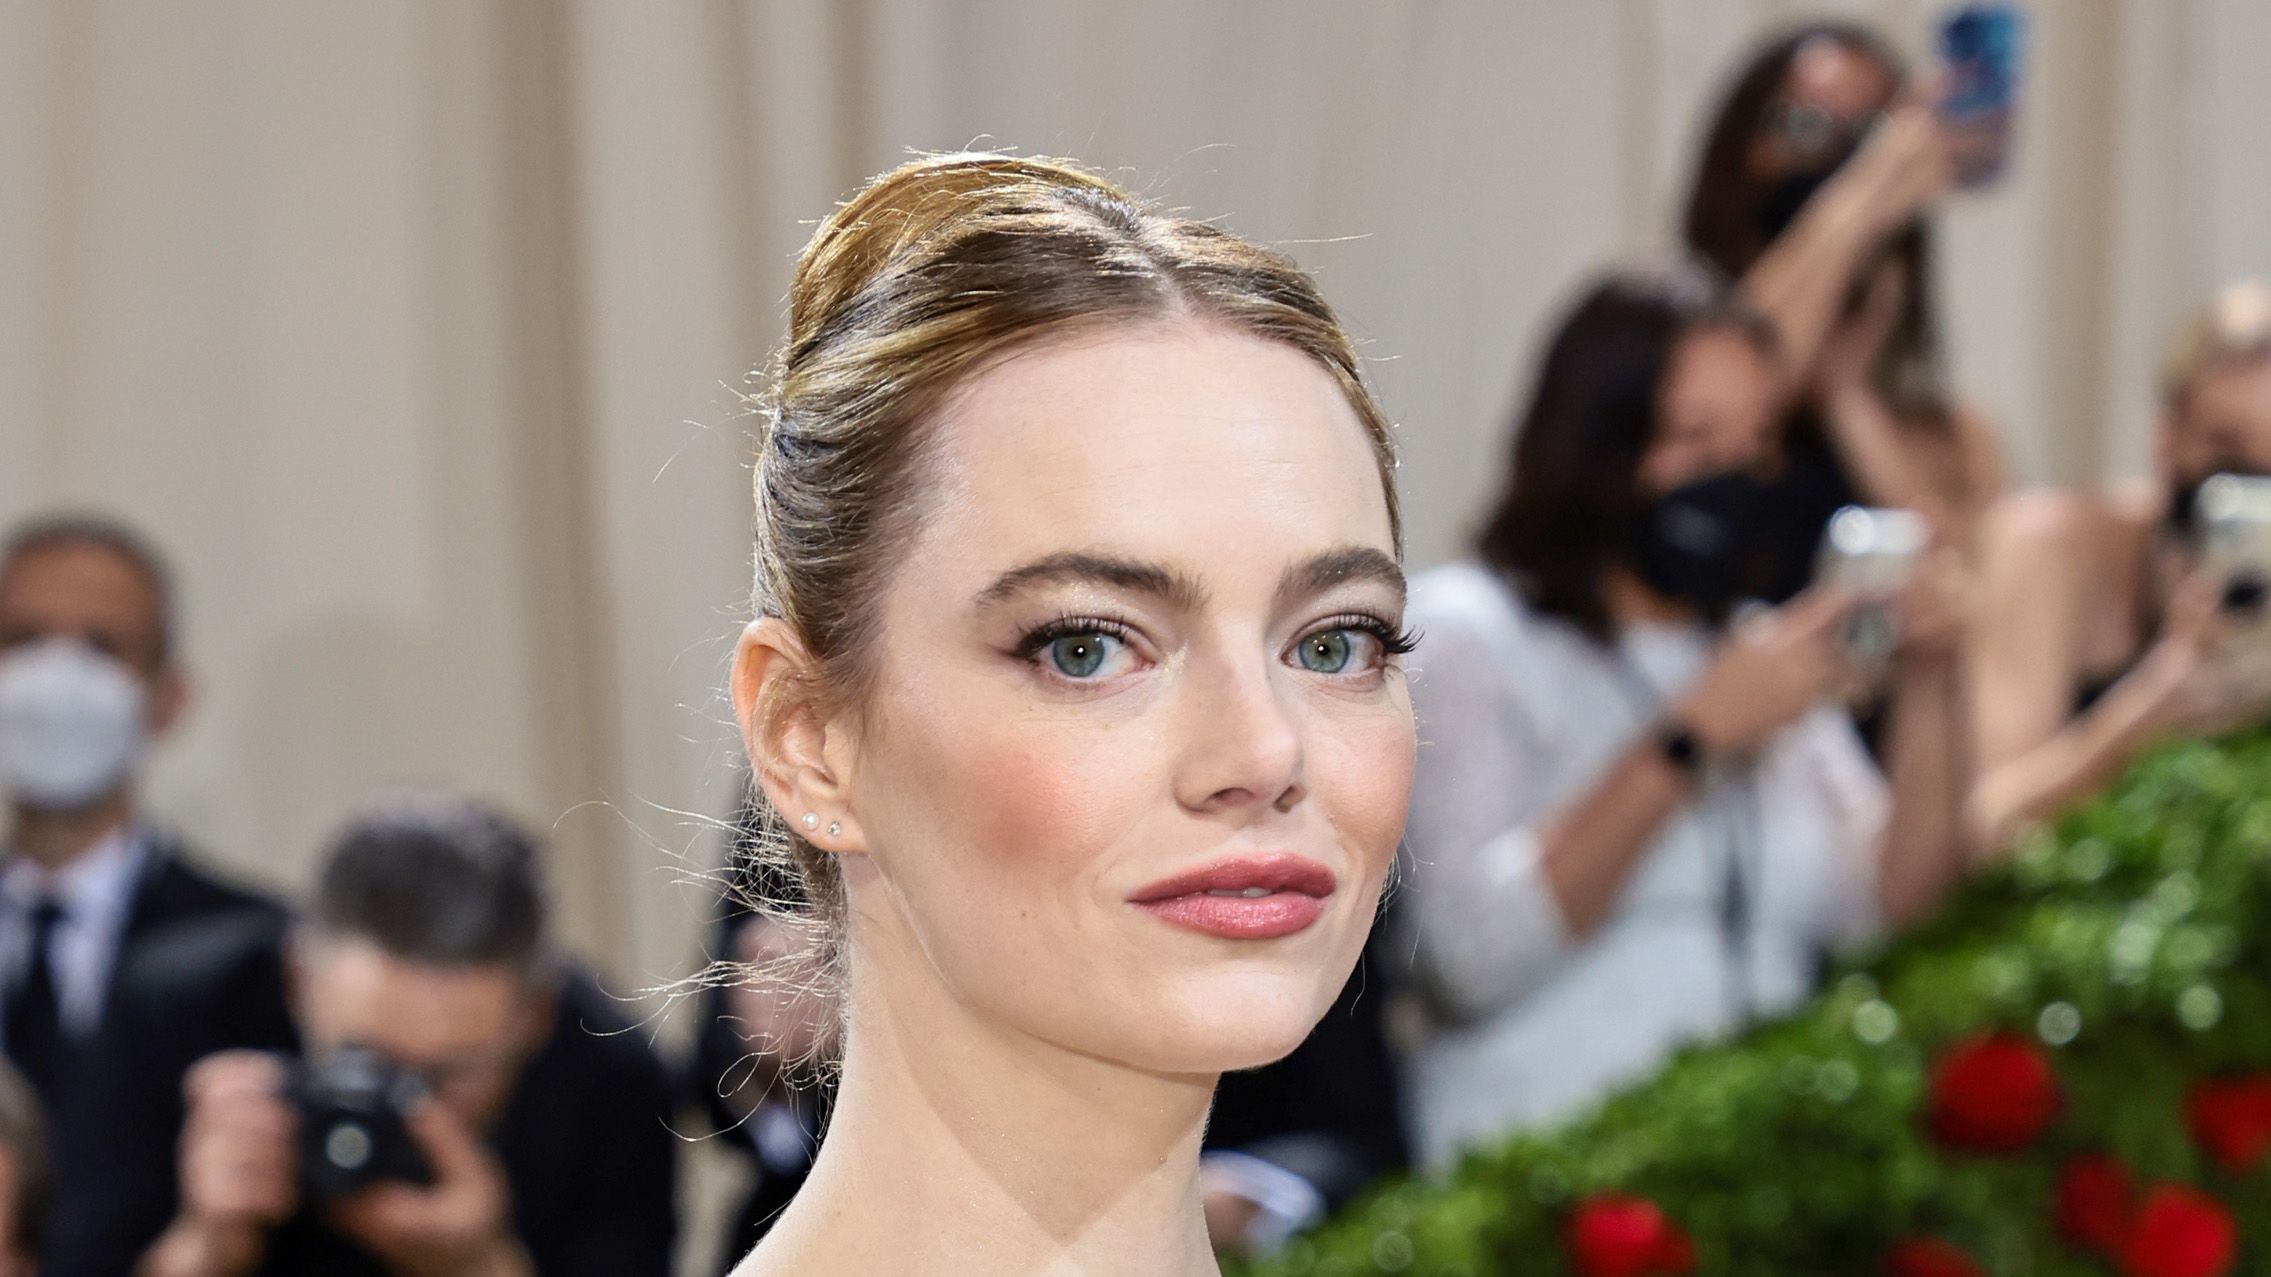 Emma Stone Wore Louis Vuitton To The 2022 Met Gala